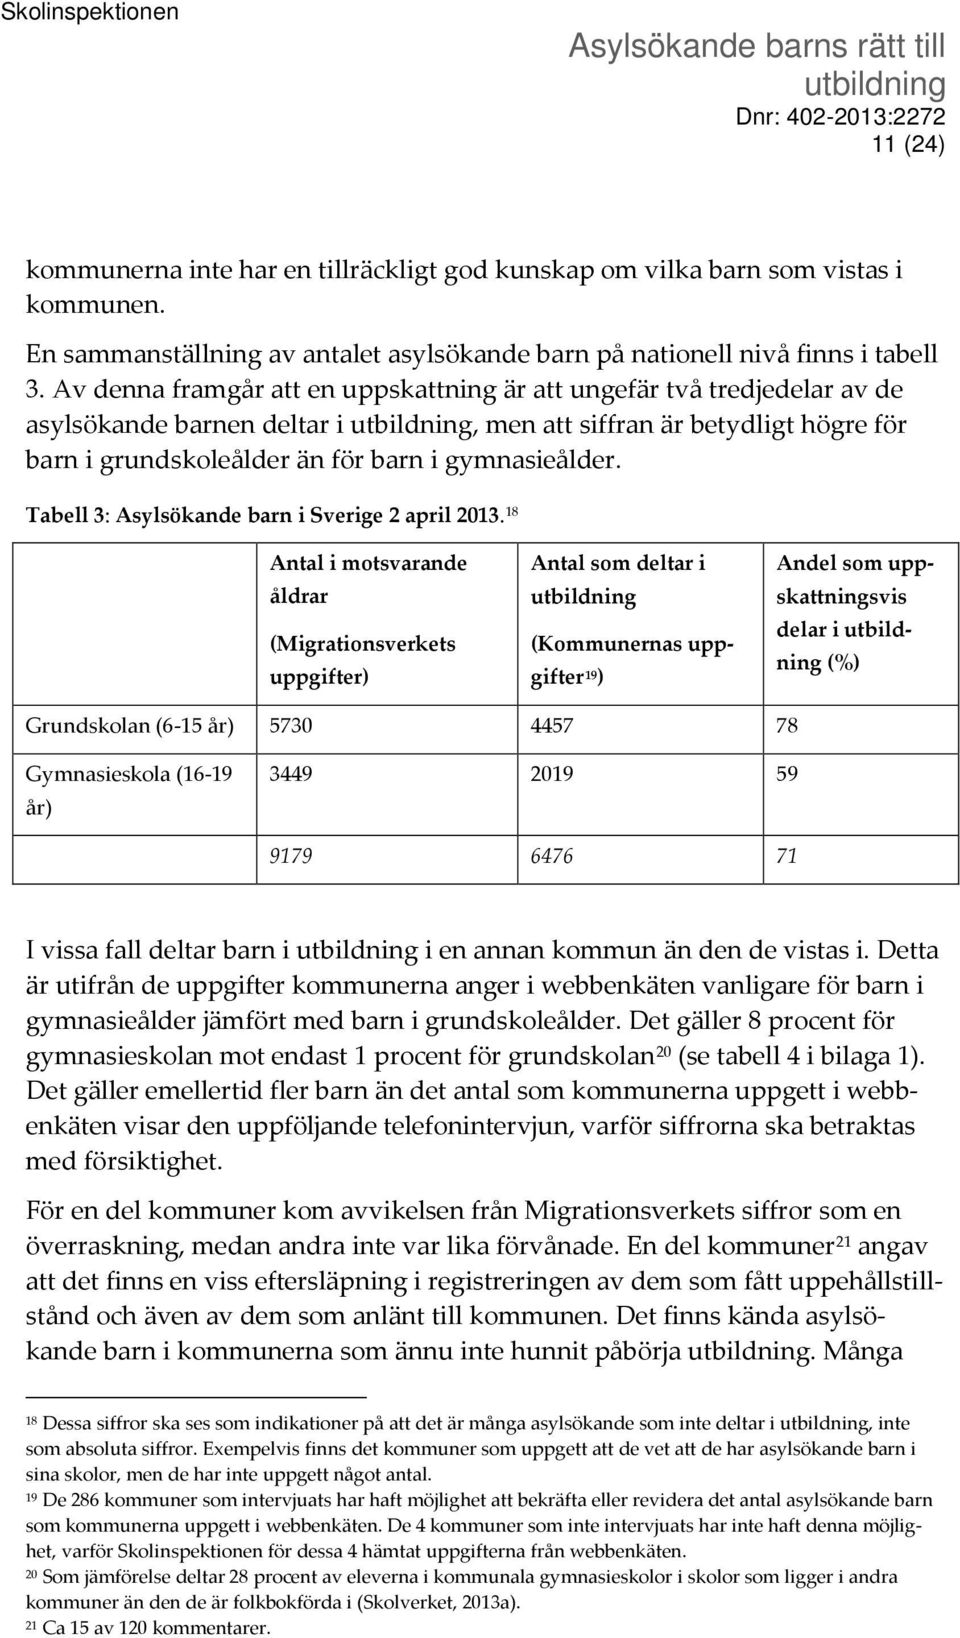 Tabell 3: Asylsökande barn i Sverige 2 april 2013.